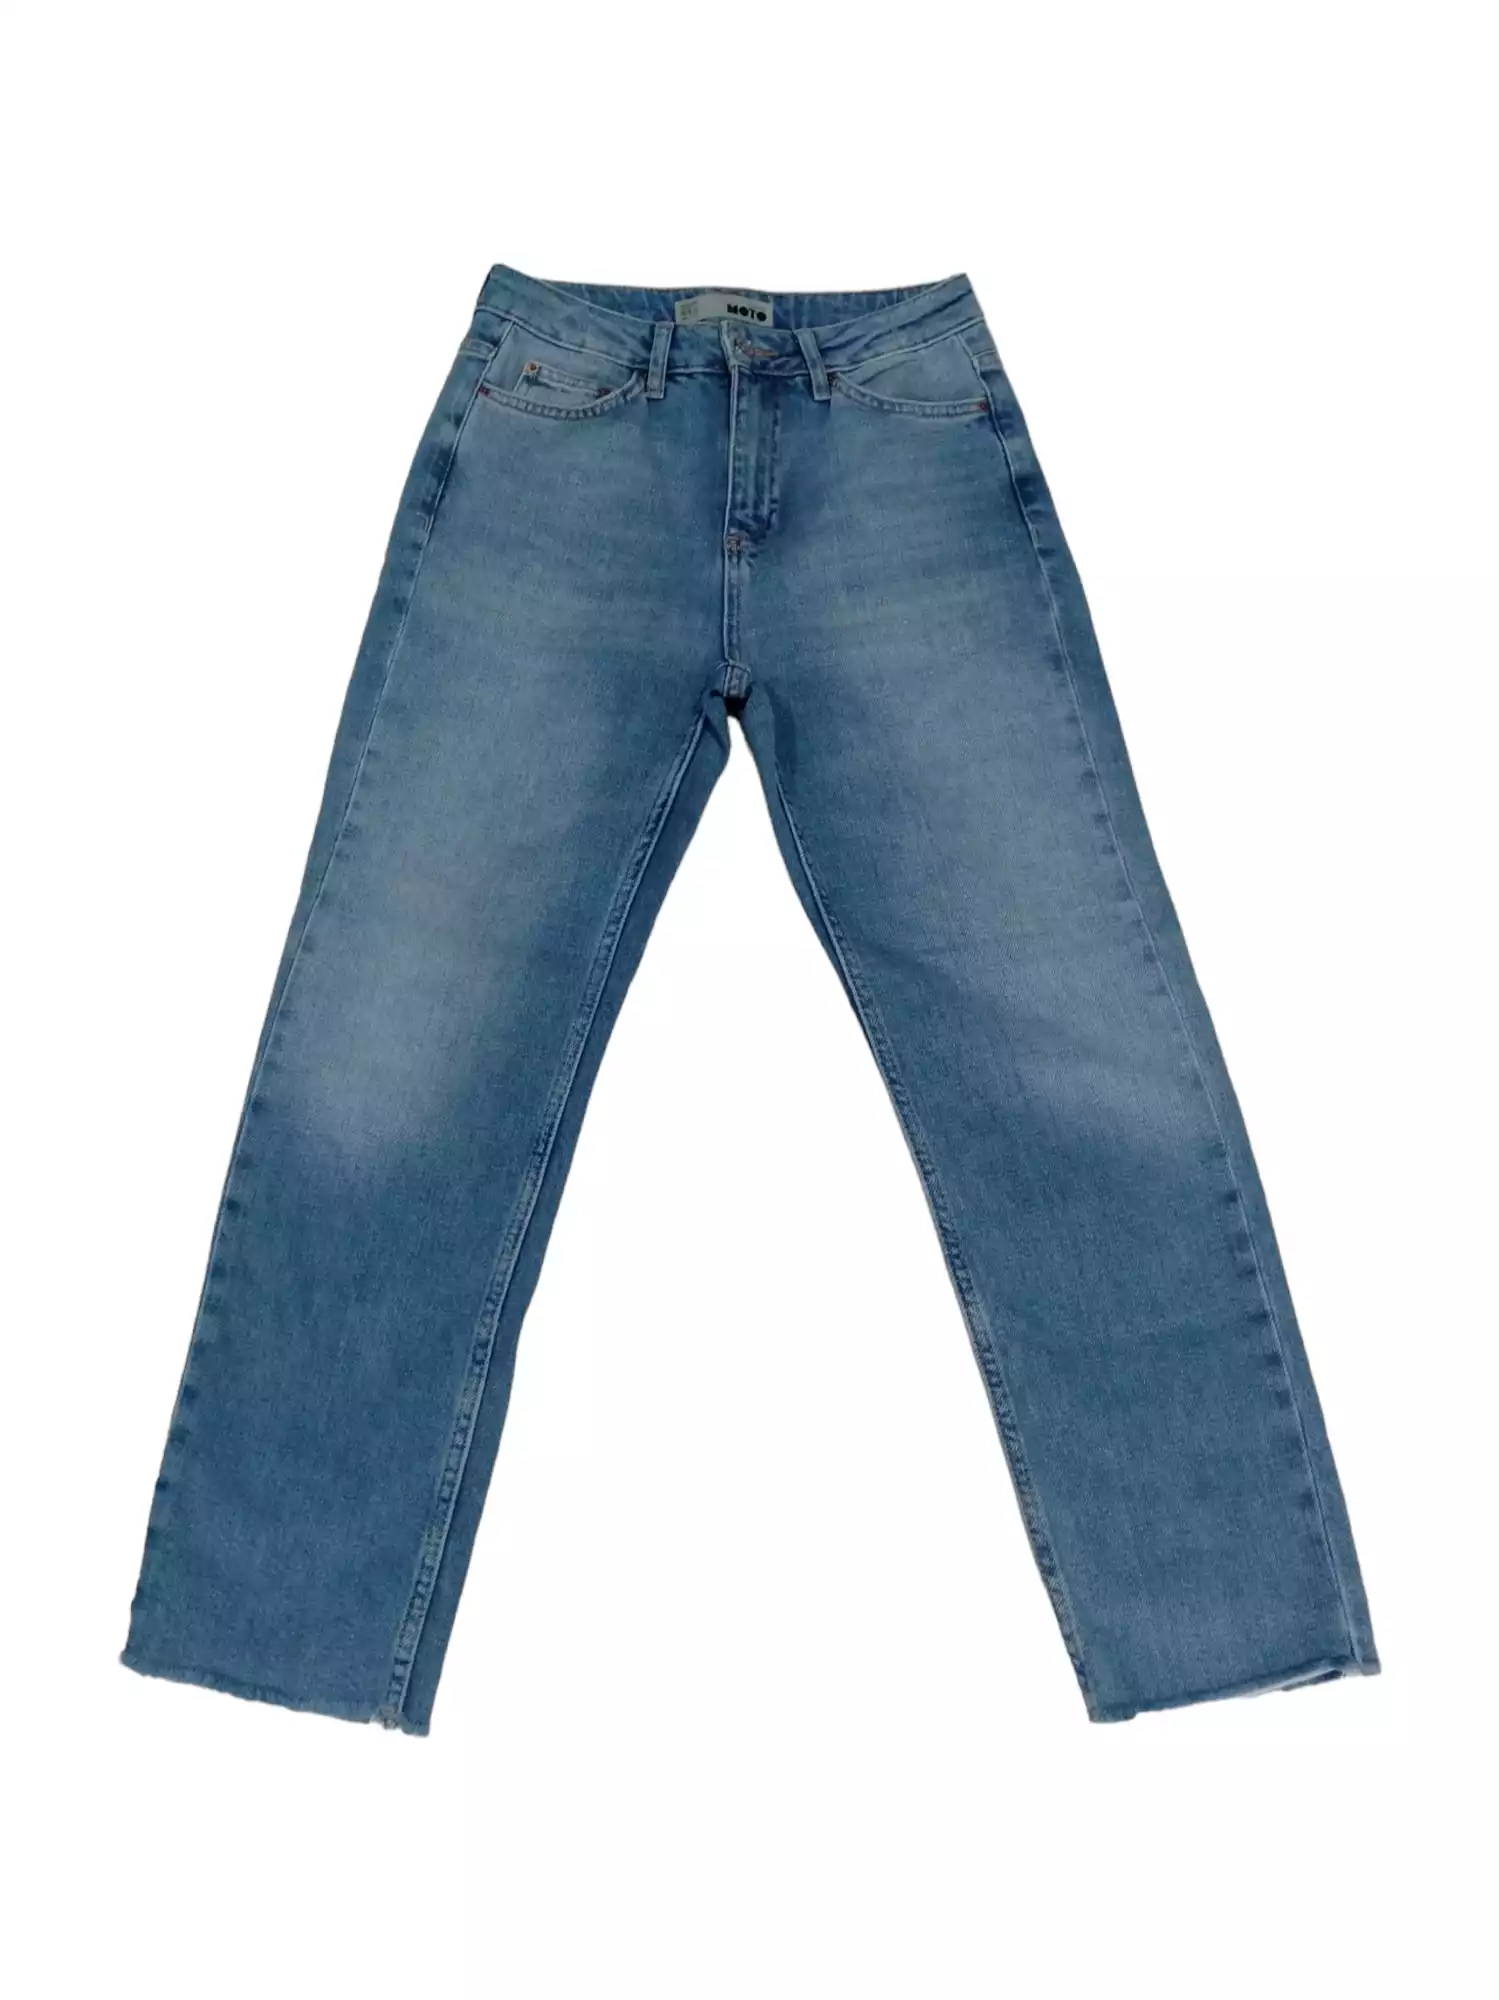 Denim Jeans by Topshop